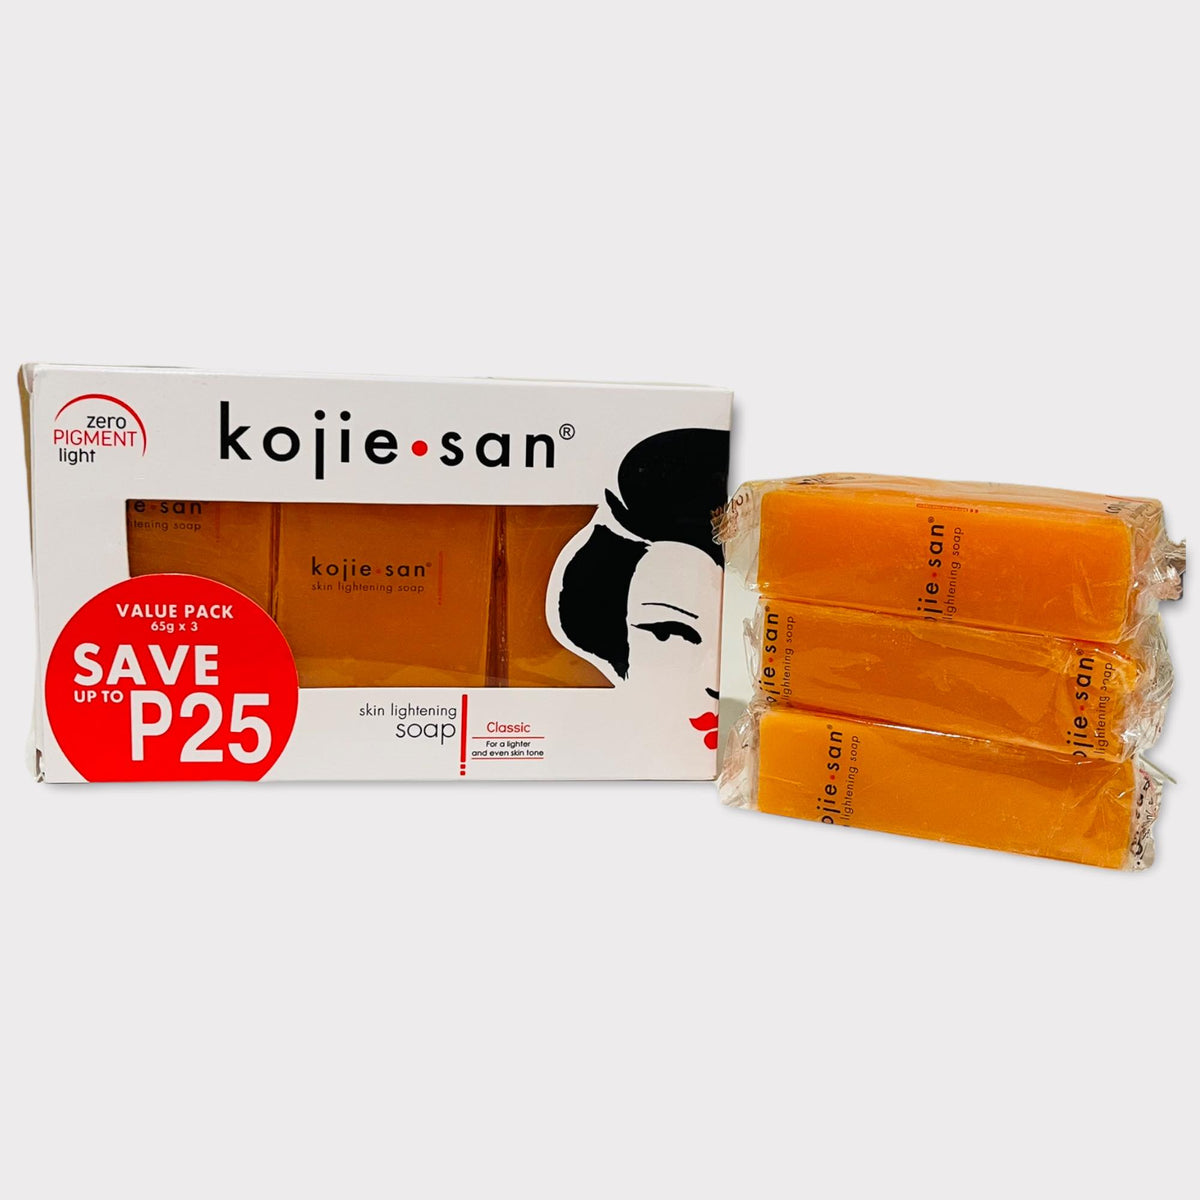 Kojie.san kojic acid soap 100% Original soap set of 2 - Price in